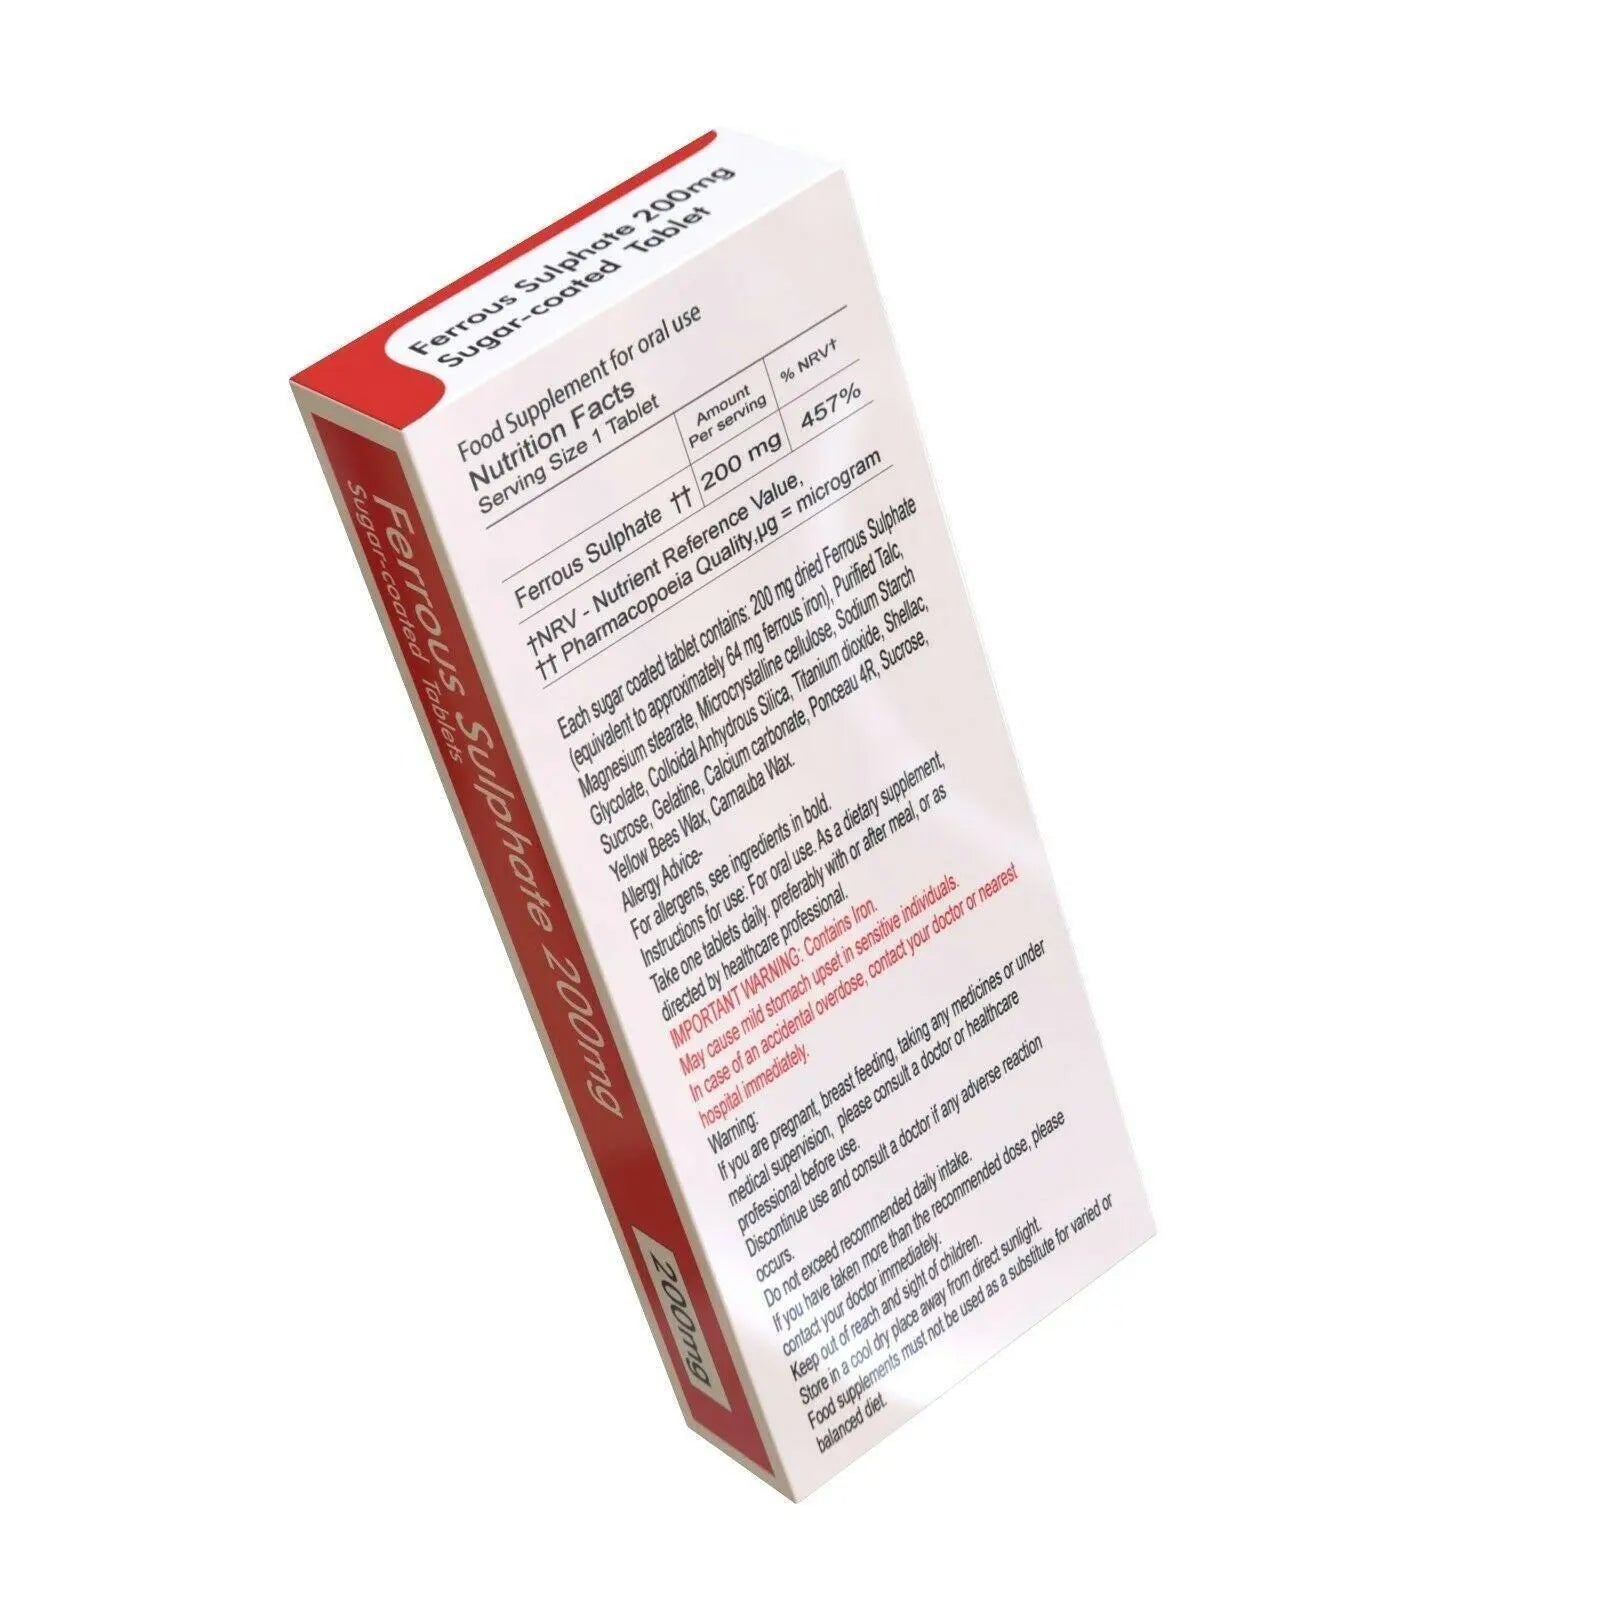 Ferrous Sulphate 200mg 28 Tablets Iron Supplement - Arc Health Nutrition UK Ltd 